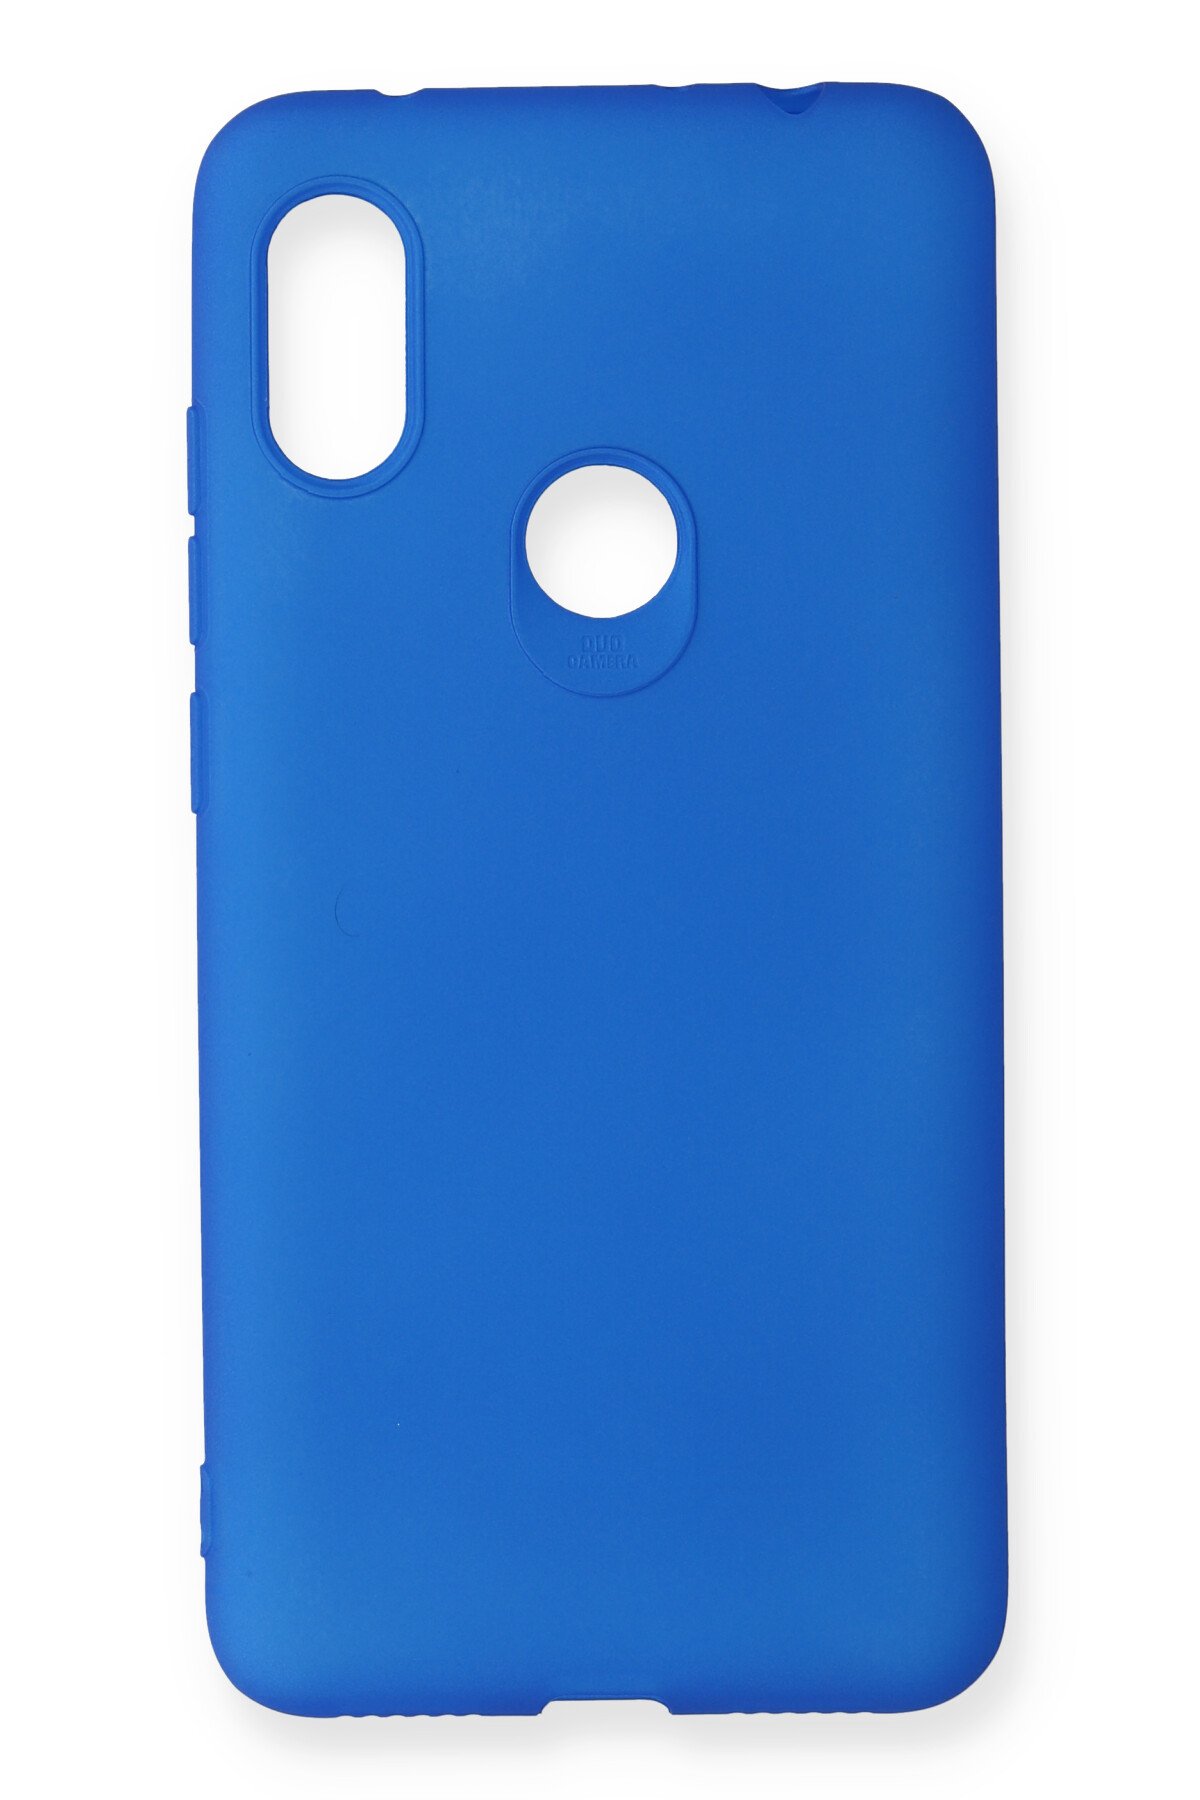 Newface Xiaomi Redmi Note 6 Pro Kılıf First Silikon - Mavi